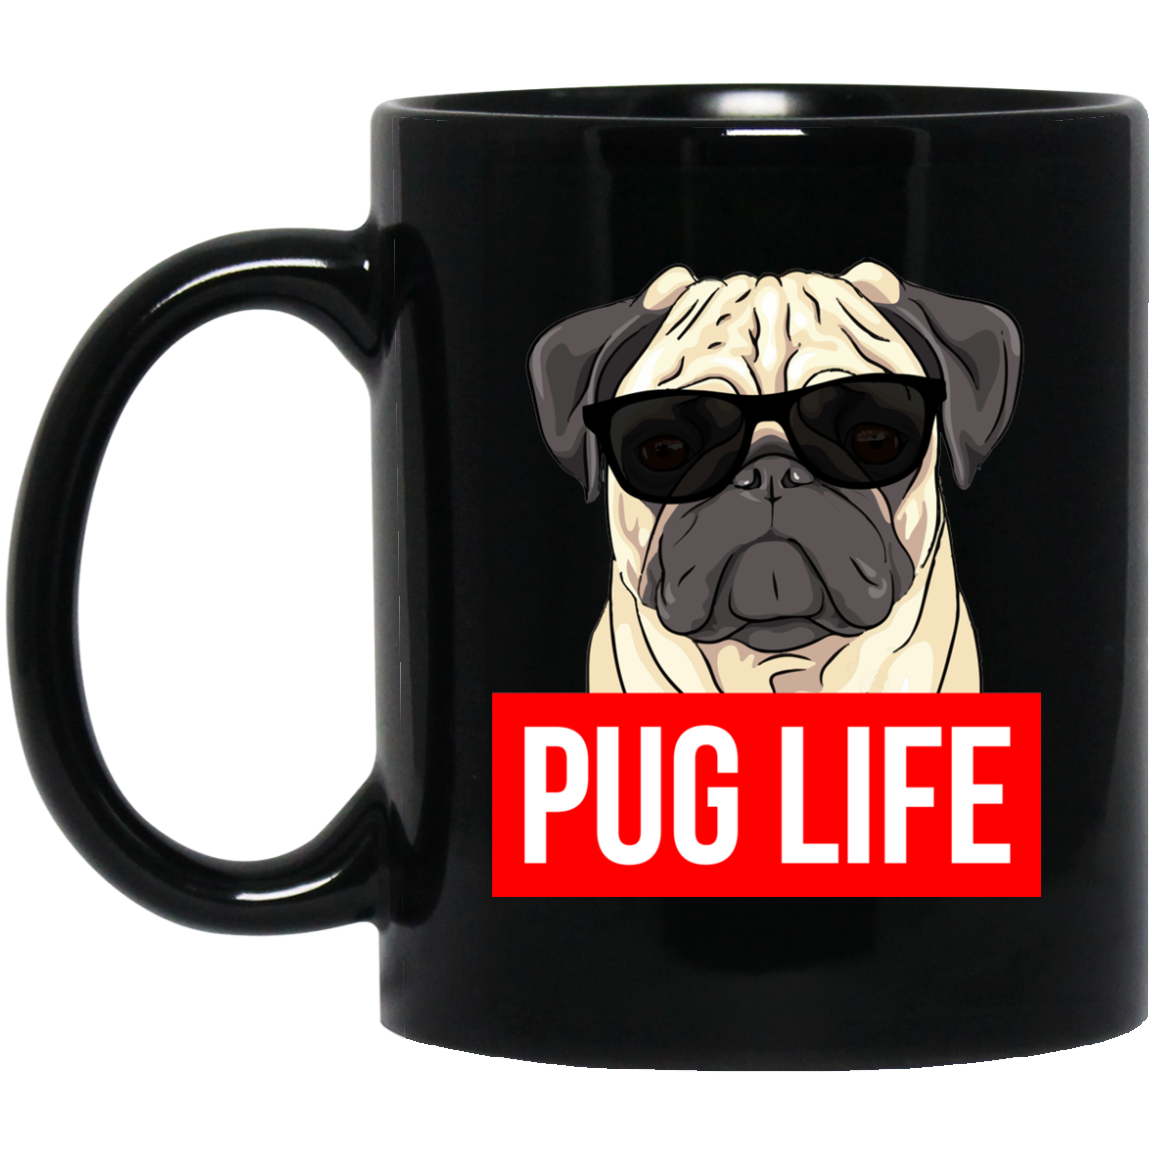 Pug Life 11 oz. Black Mug